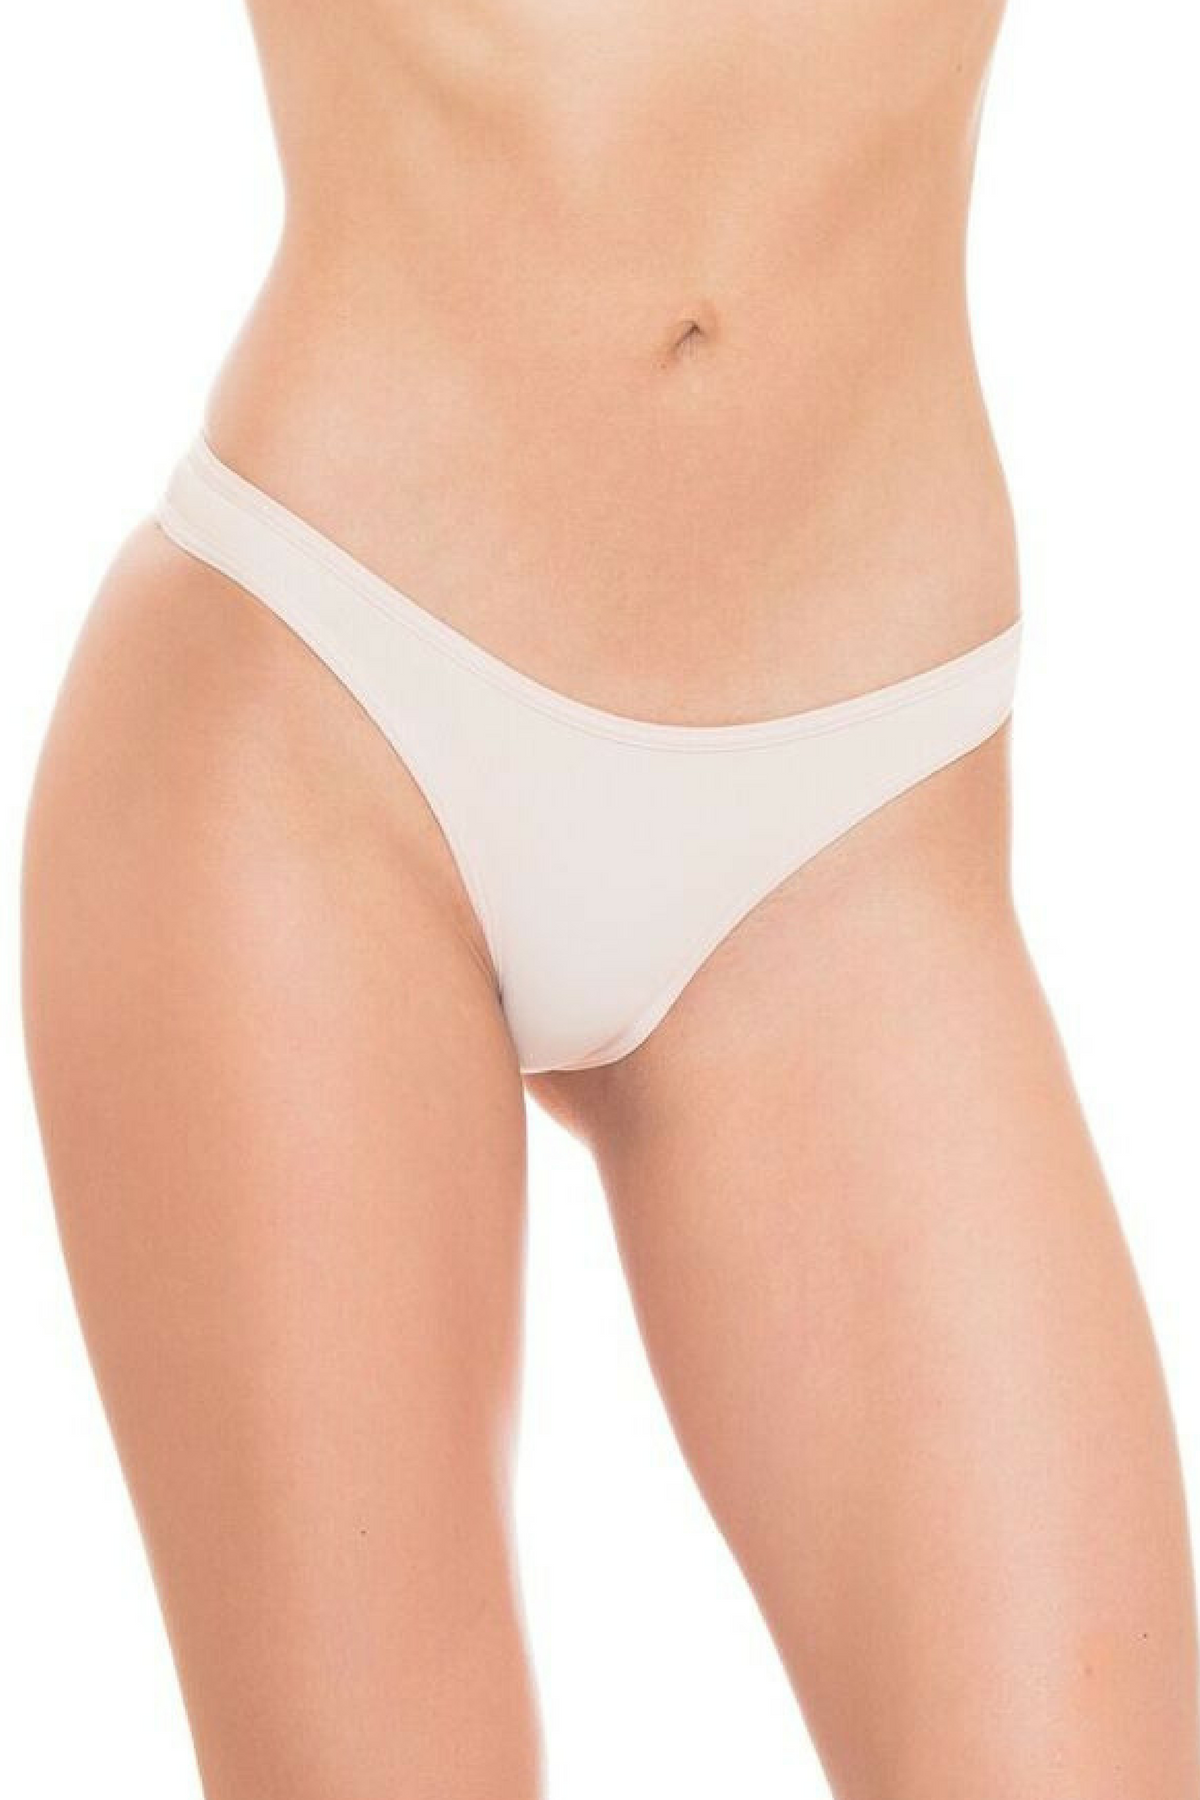 Beige Brazilian tanga underwear panties